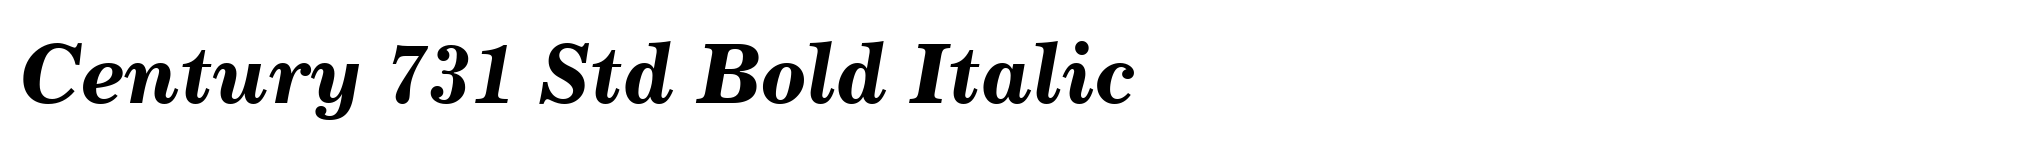 Century 731 Std Bold Italic image